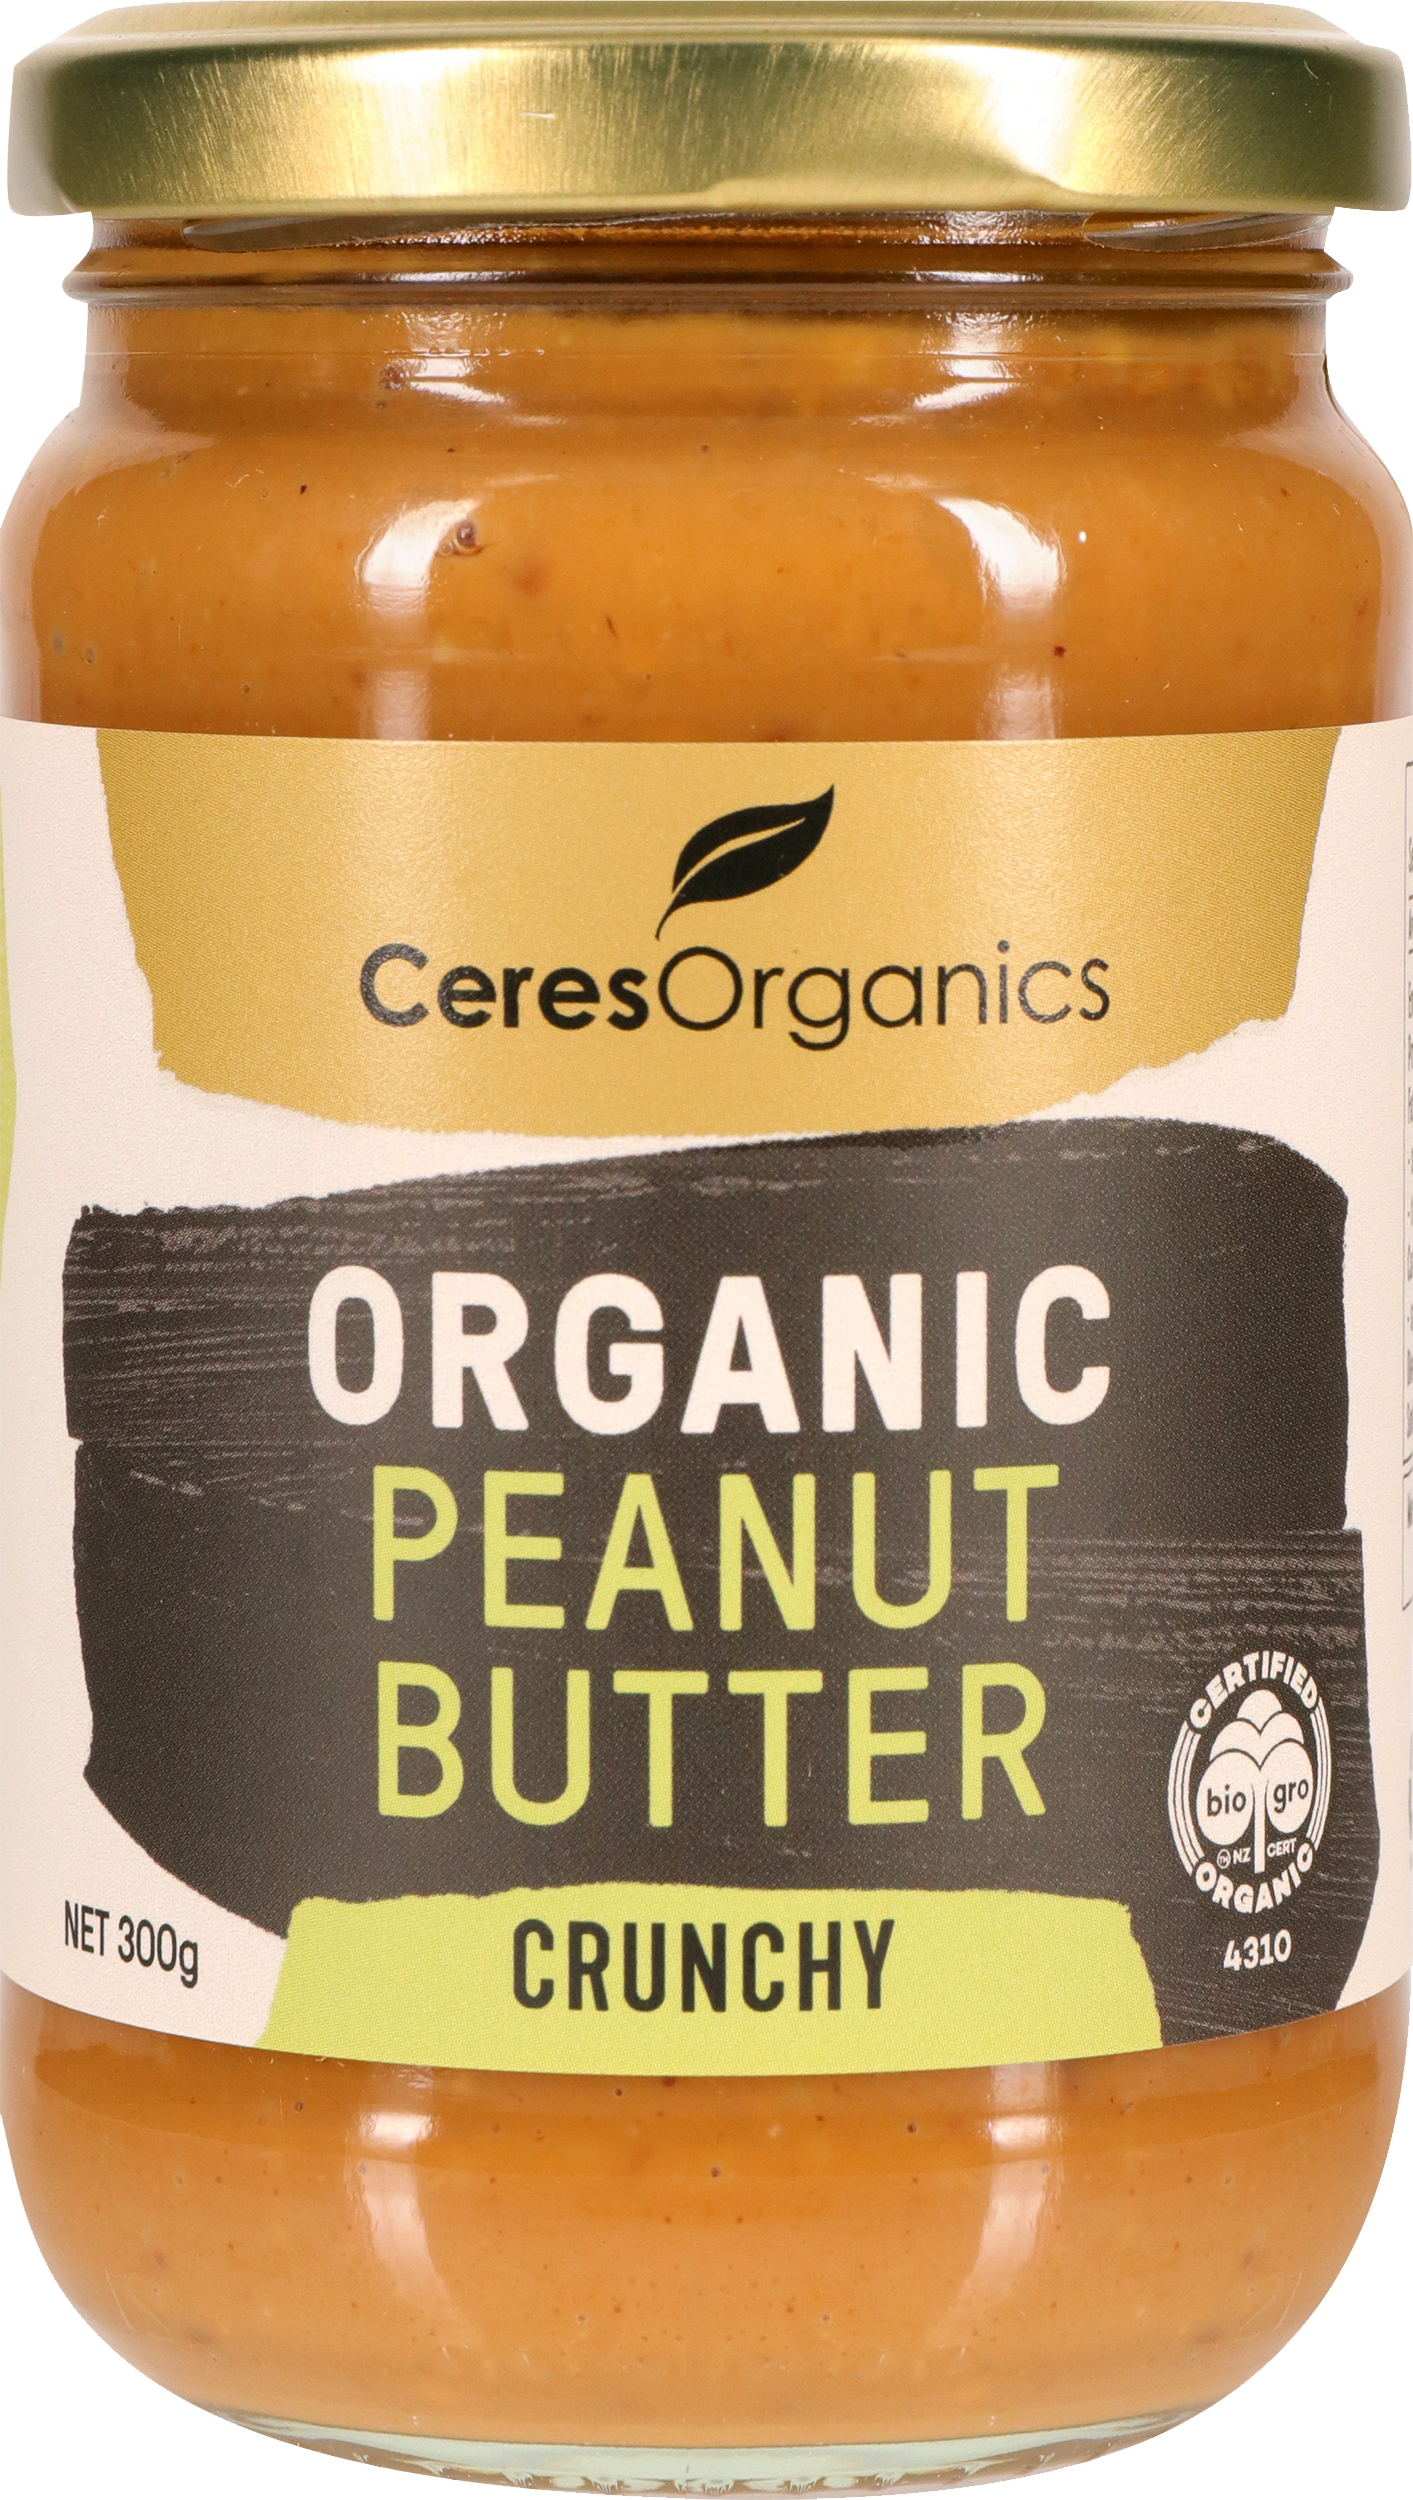 Organic Peanut Butter, Crunchy - 300g – Ceres Organics